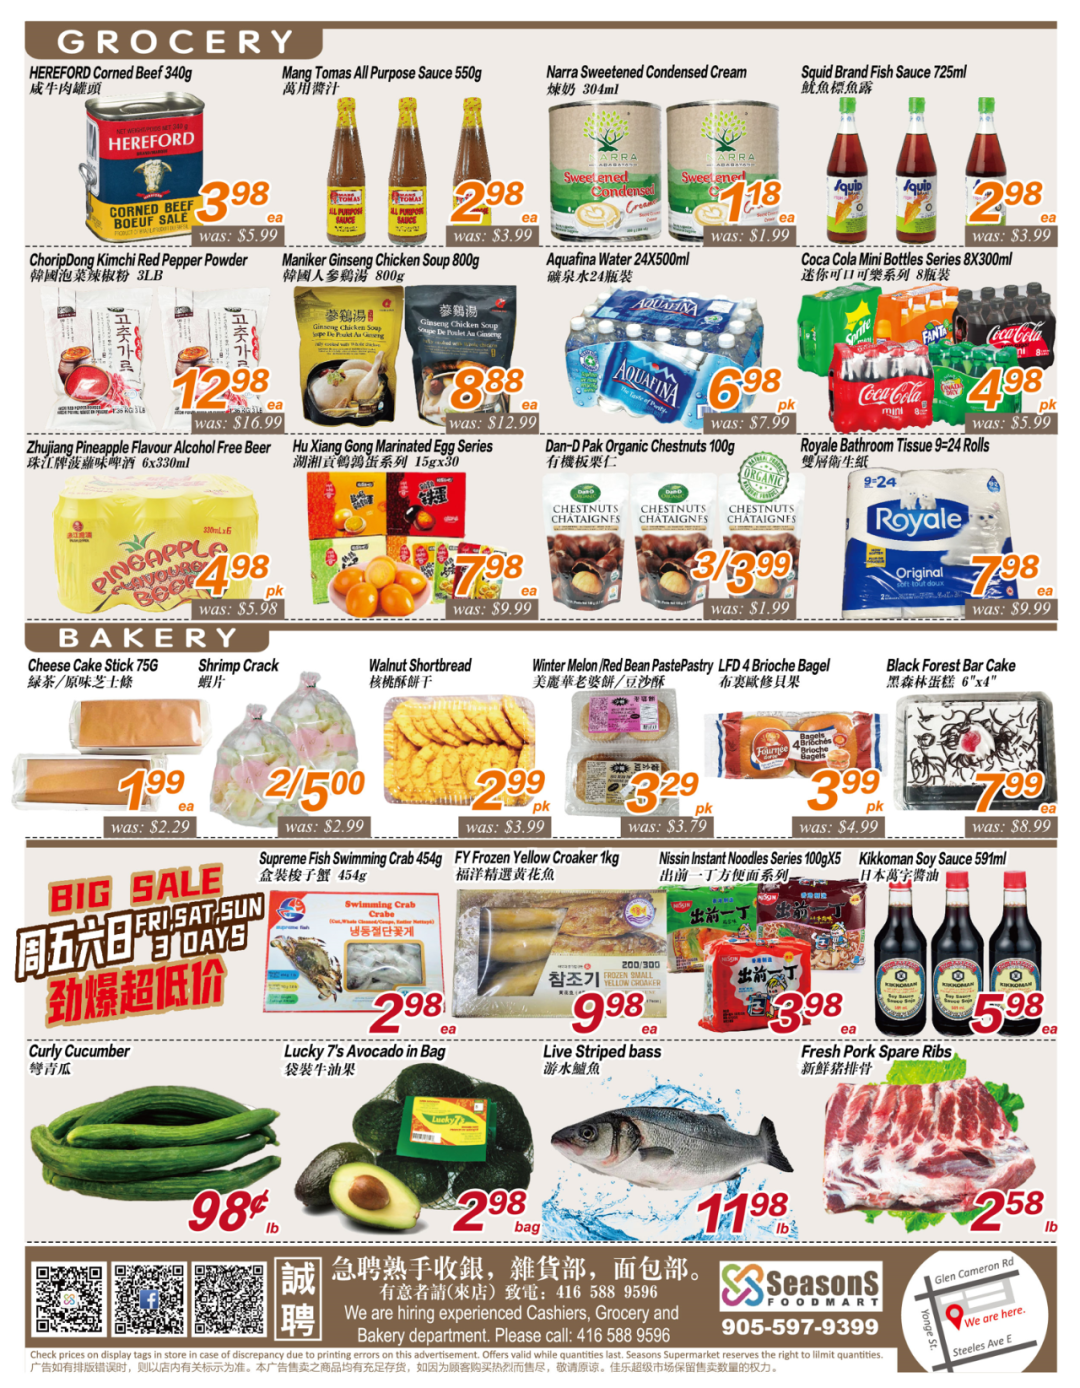 佳乐超市 Seasons Foodmart Flyer 2022年11月25日至12月1日特价商品